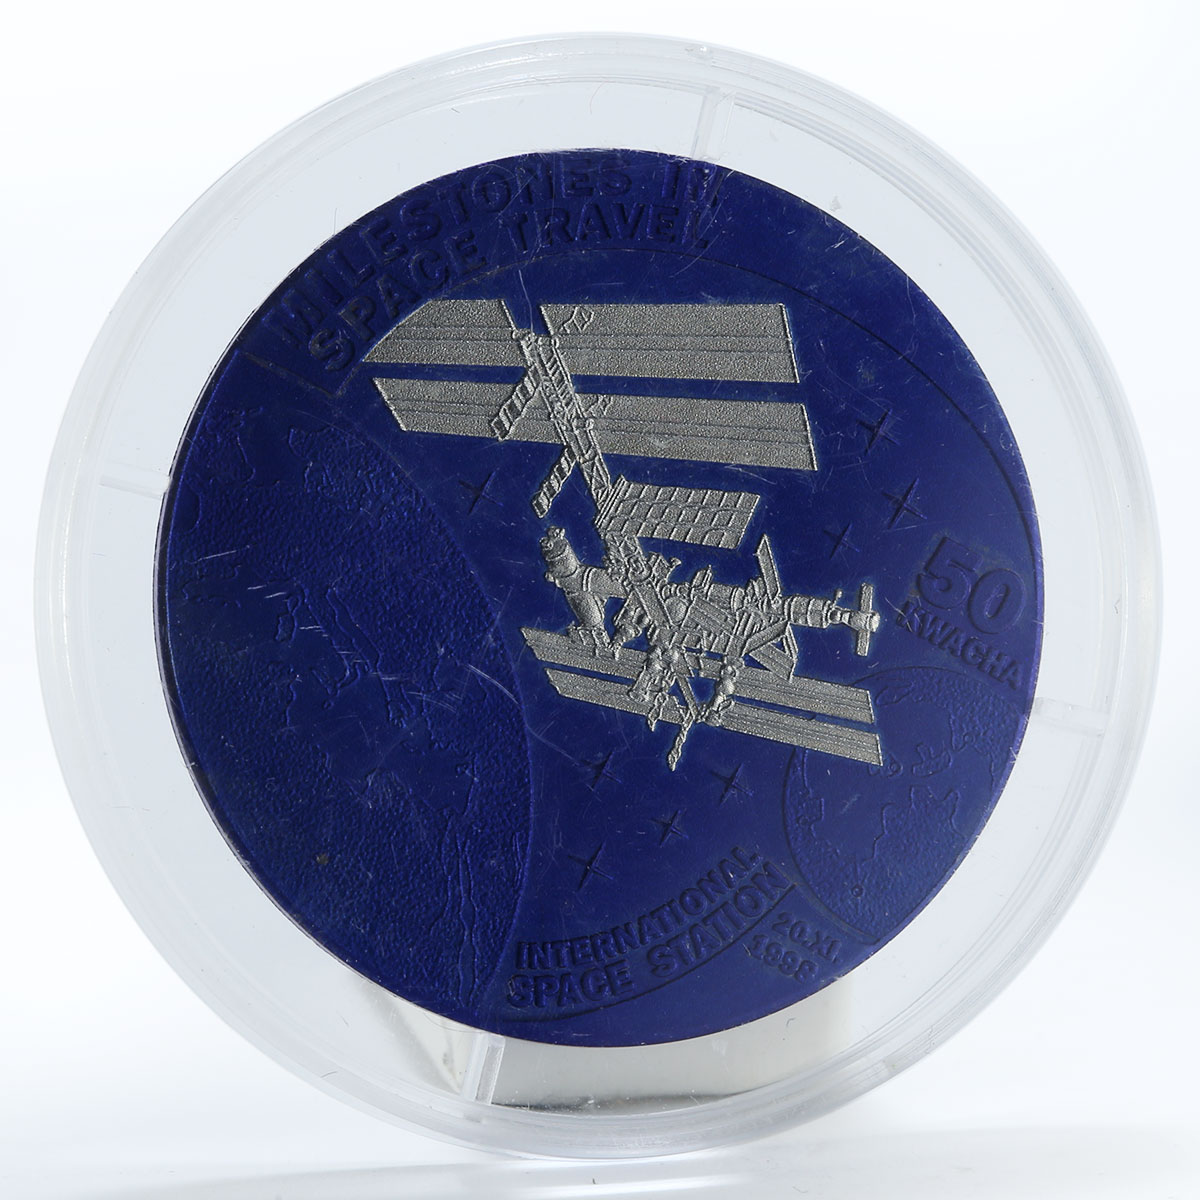 Malawi 50 kwacha International Space Station niobium coin 2009